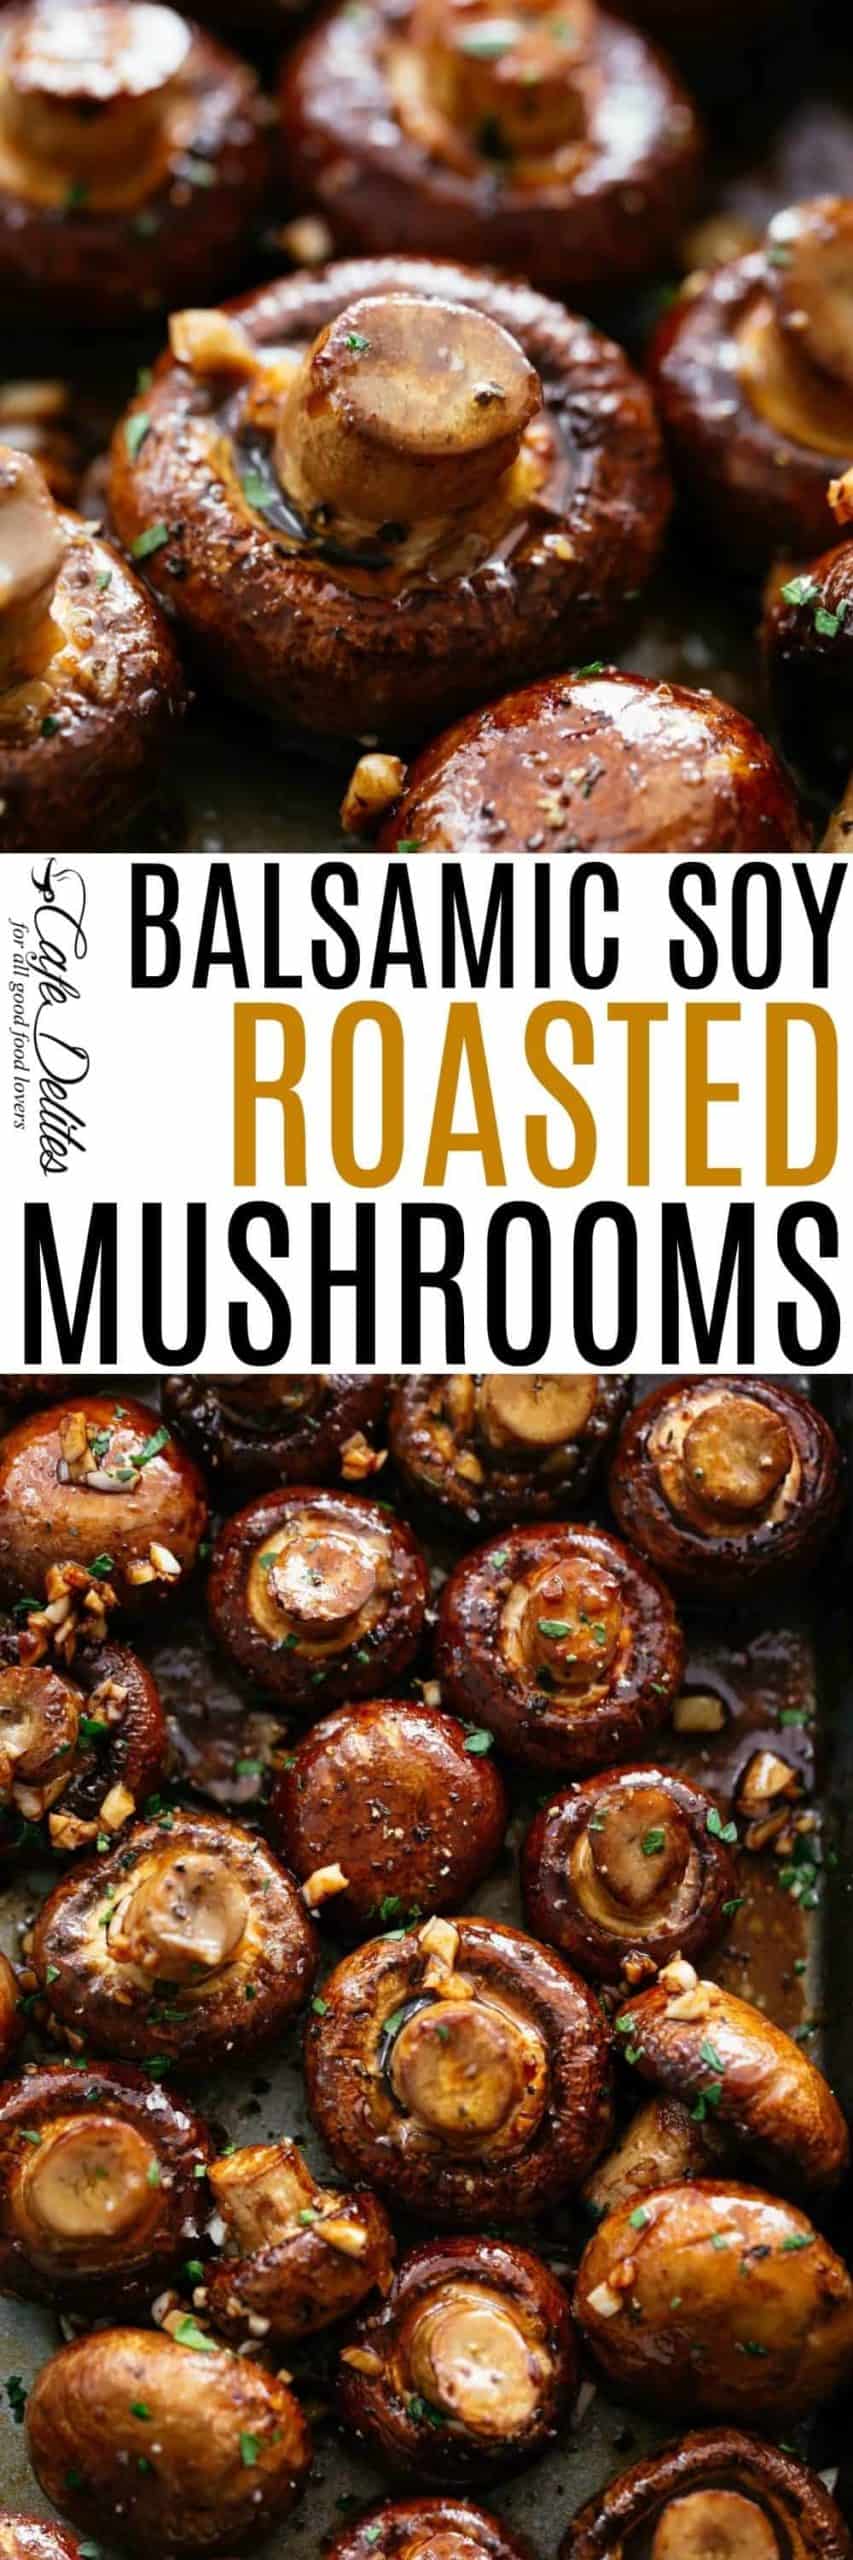 Balsamic Roasted Mushrooms | cafedelites.com